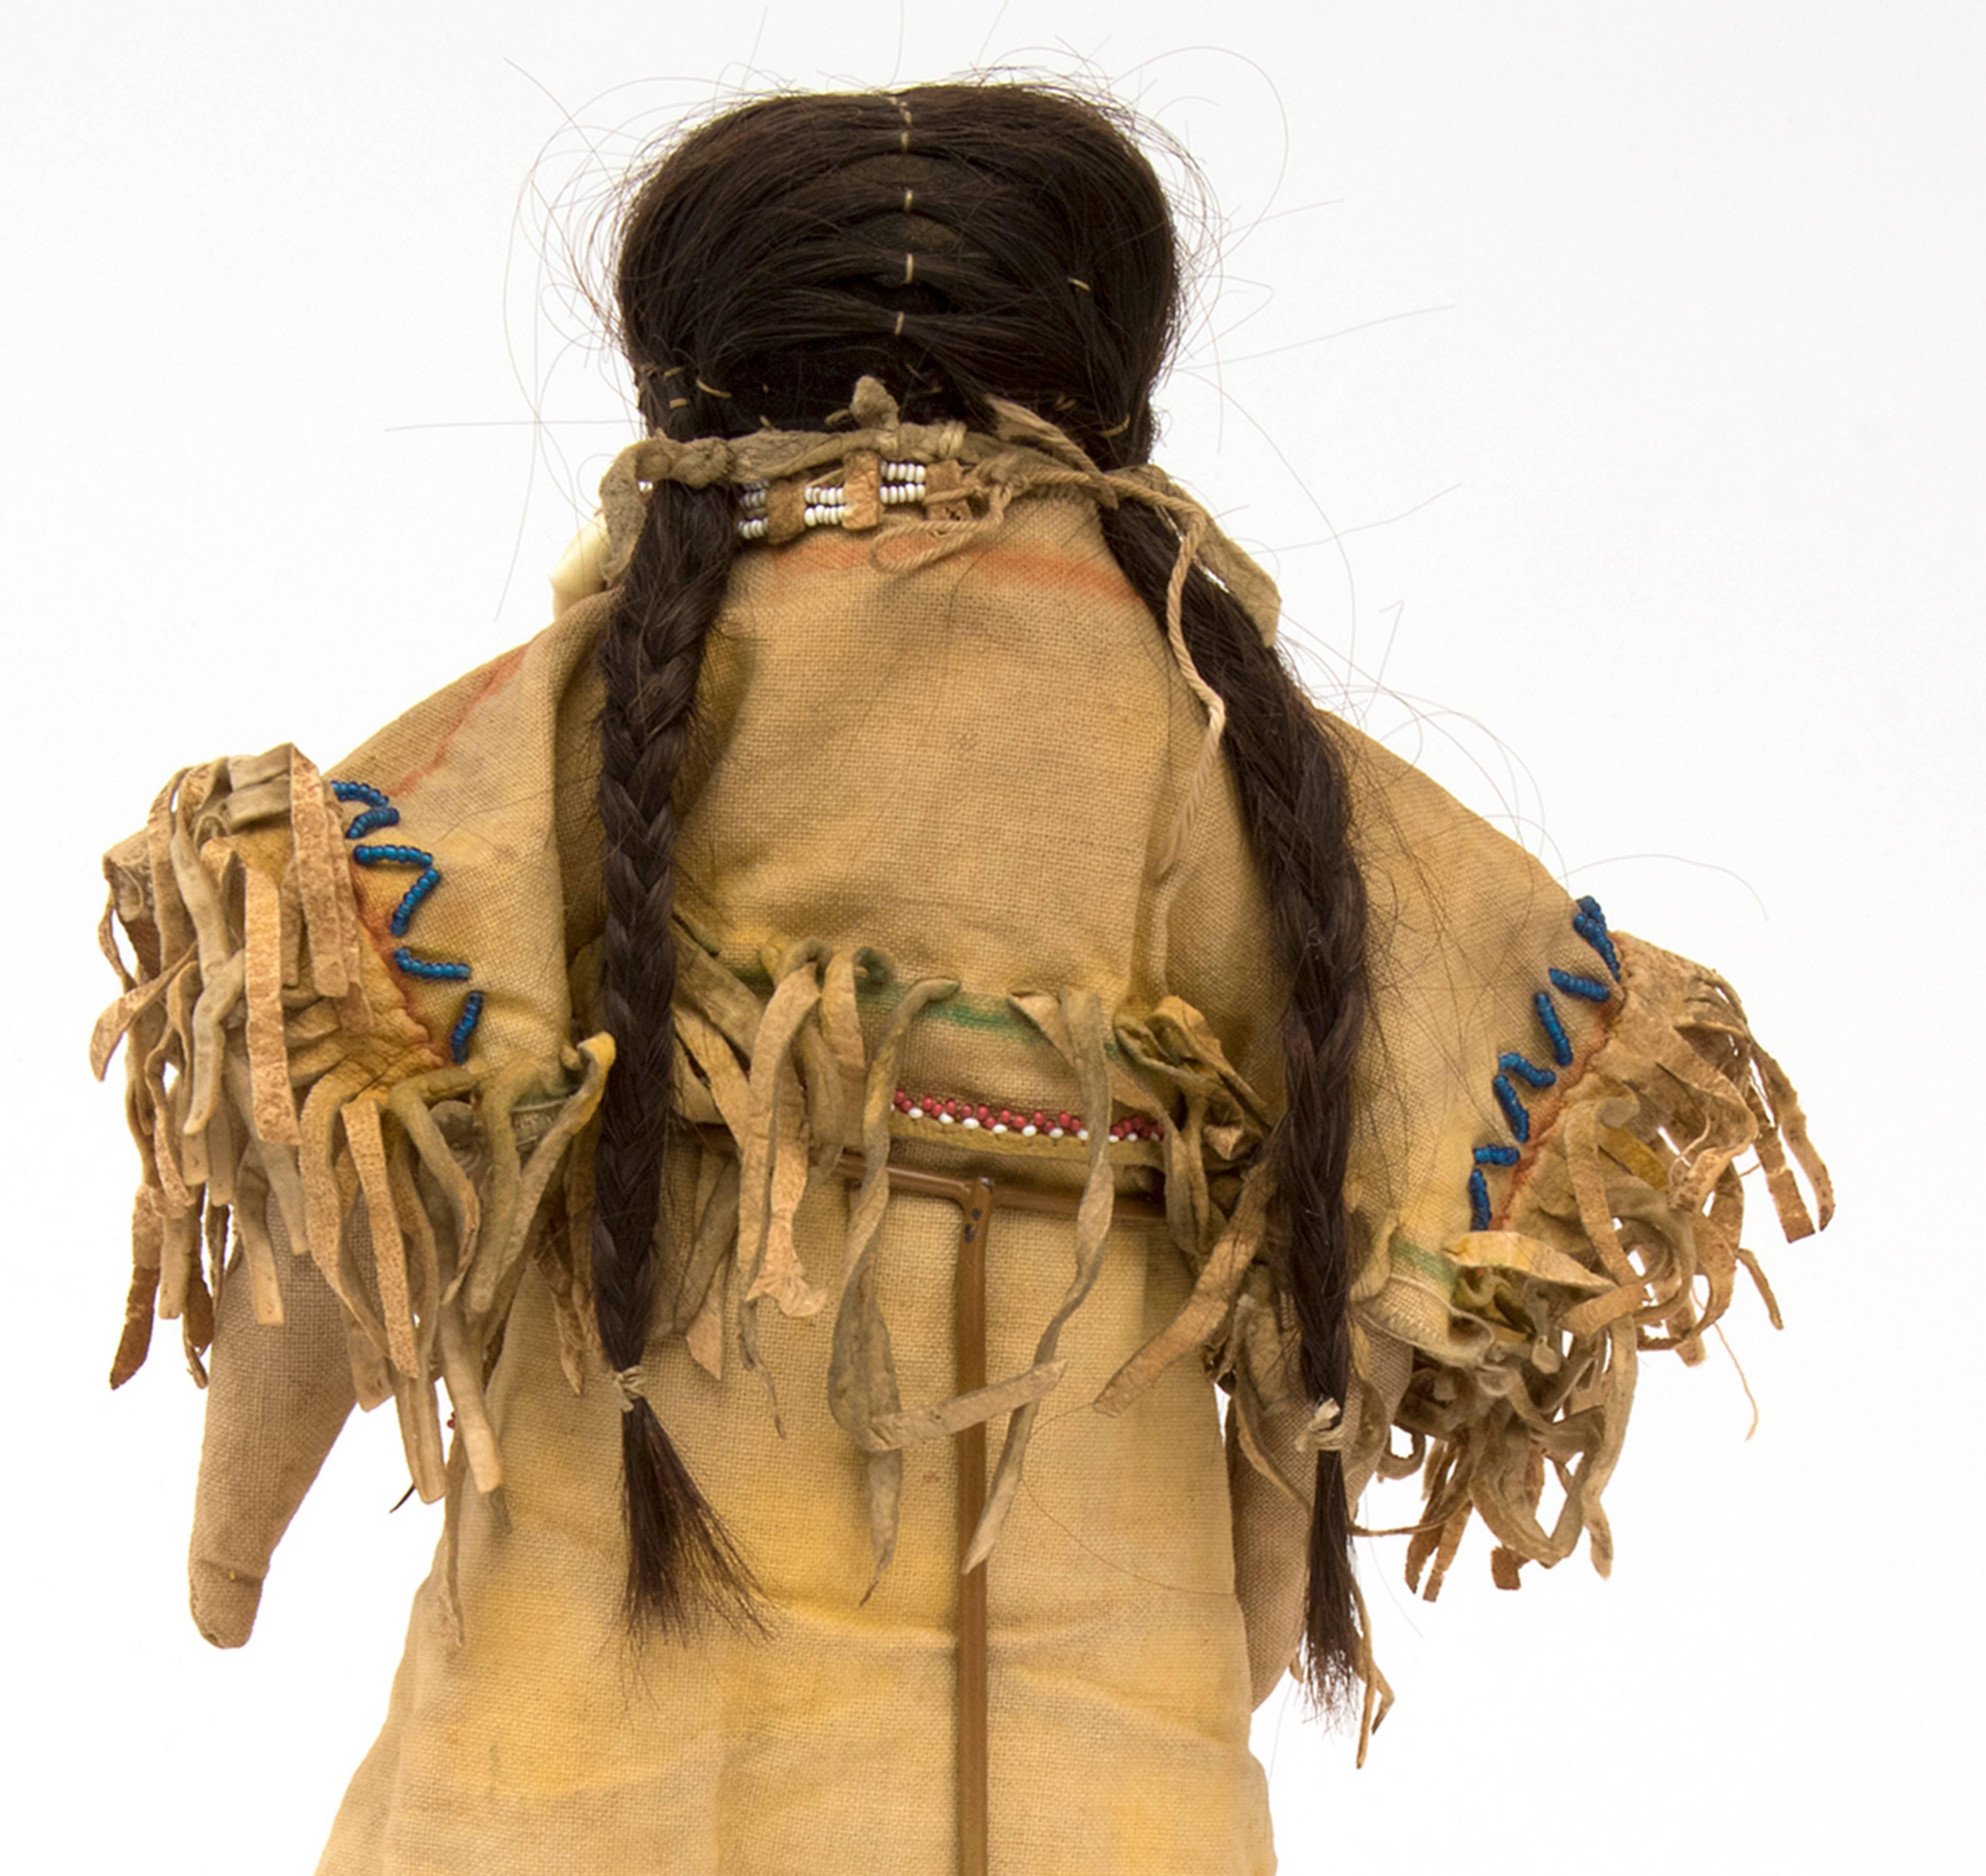 handmade native american dolls